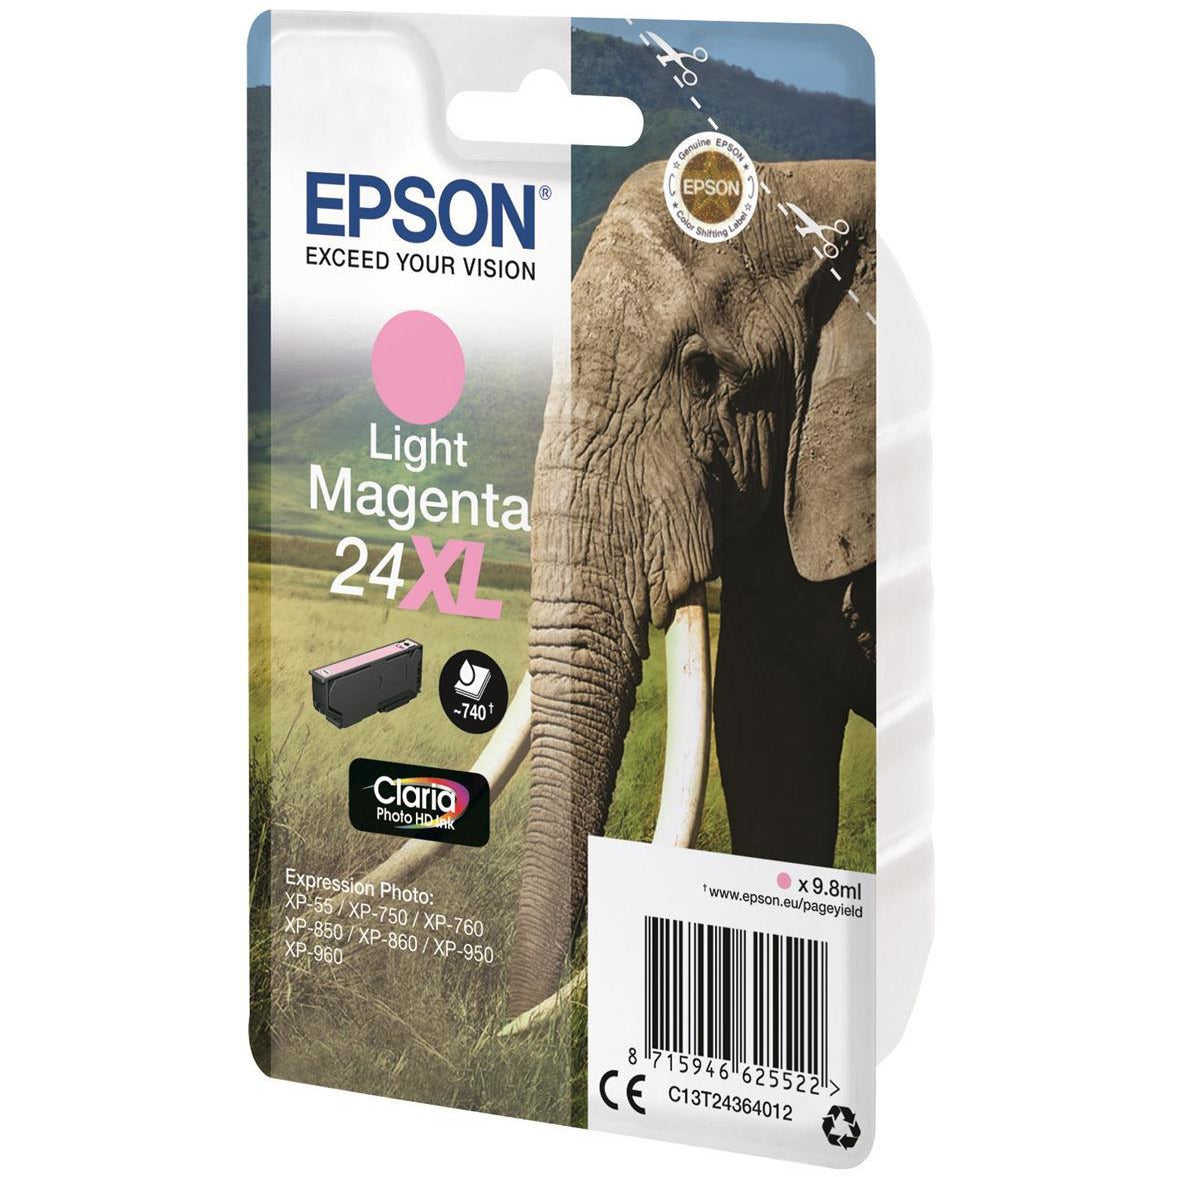 Epson Elephant 24XL (non-Tagged) High Capacity (Prentar 740 síður) blekhylki (Light rautt) fyrir Epson Expression Photo: XP-750 / XP-850